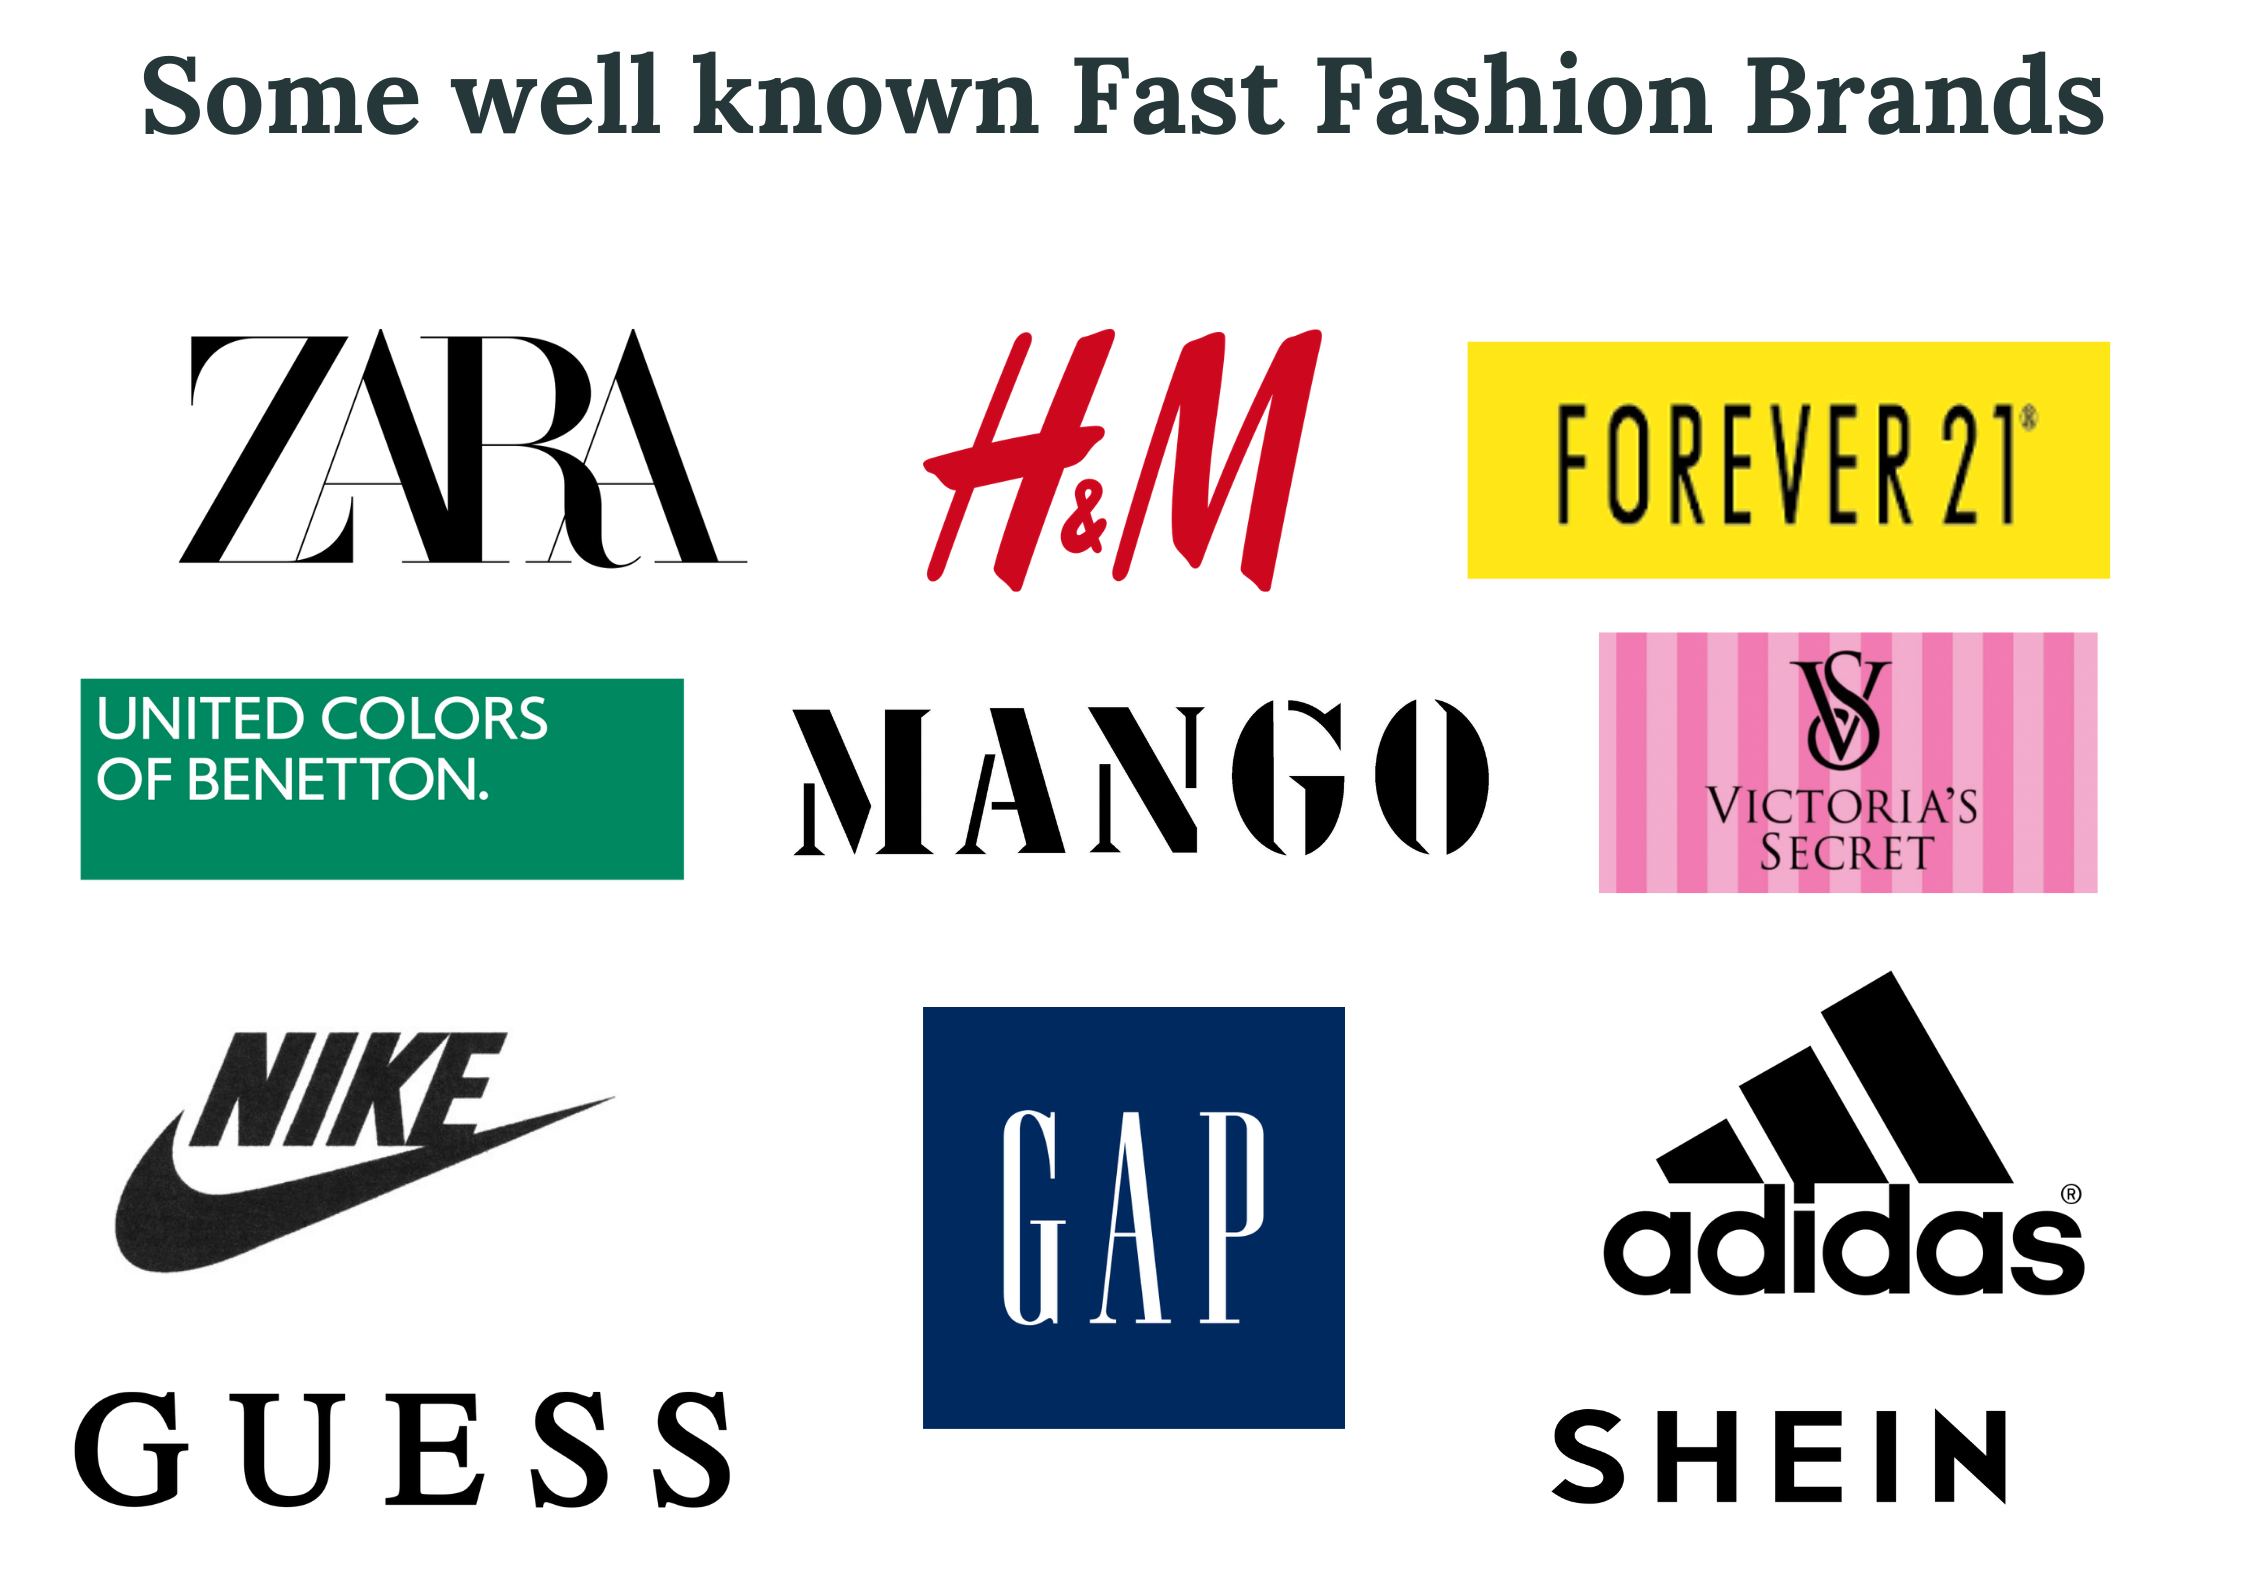 Fast Fashion Brands To Avoid Myslenkyocemkoli Blog - www.vrogue.co